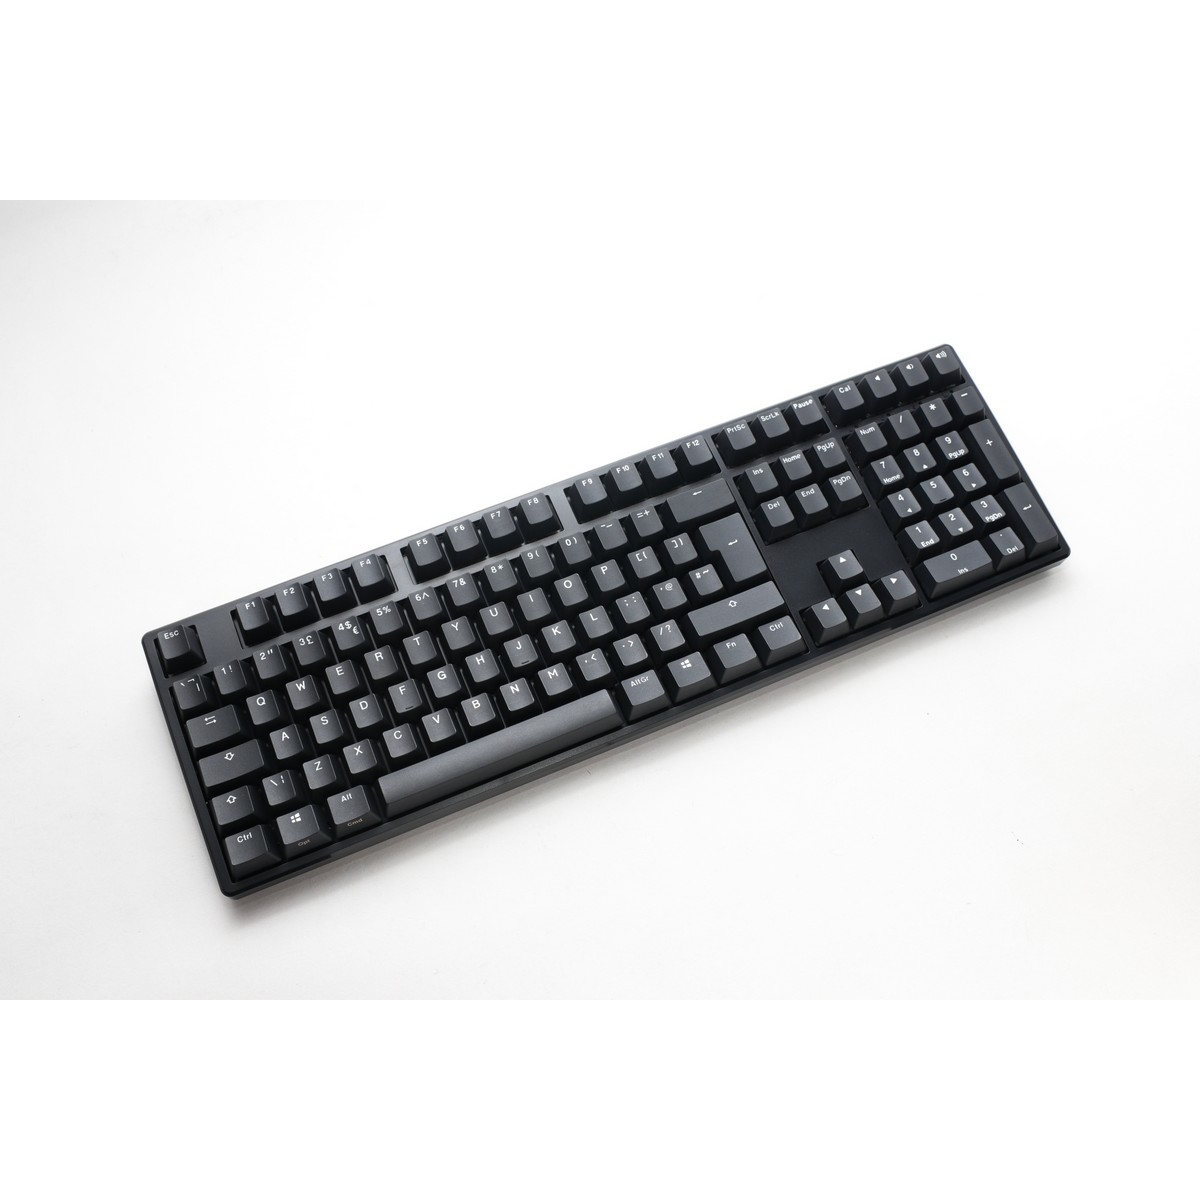 Ducky - Ducky Origin USB Mechanical Gaming Keyboard Cherry MX Black - Black UK Layout